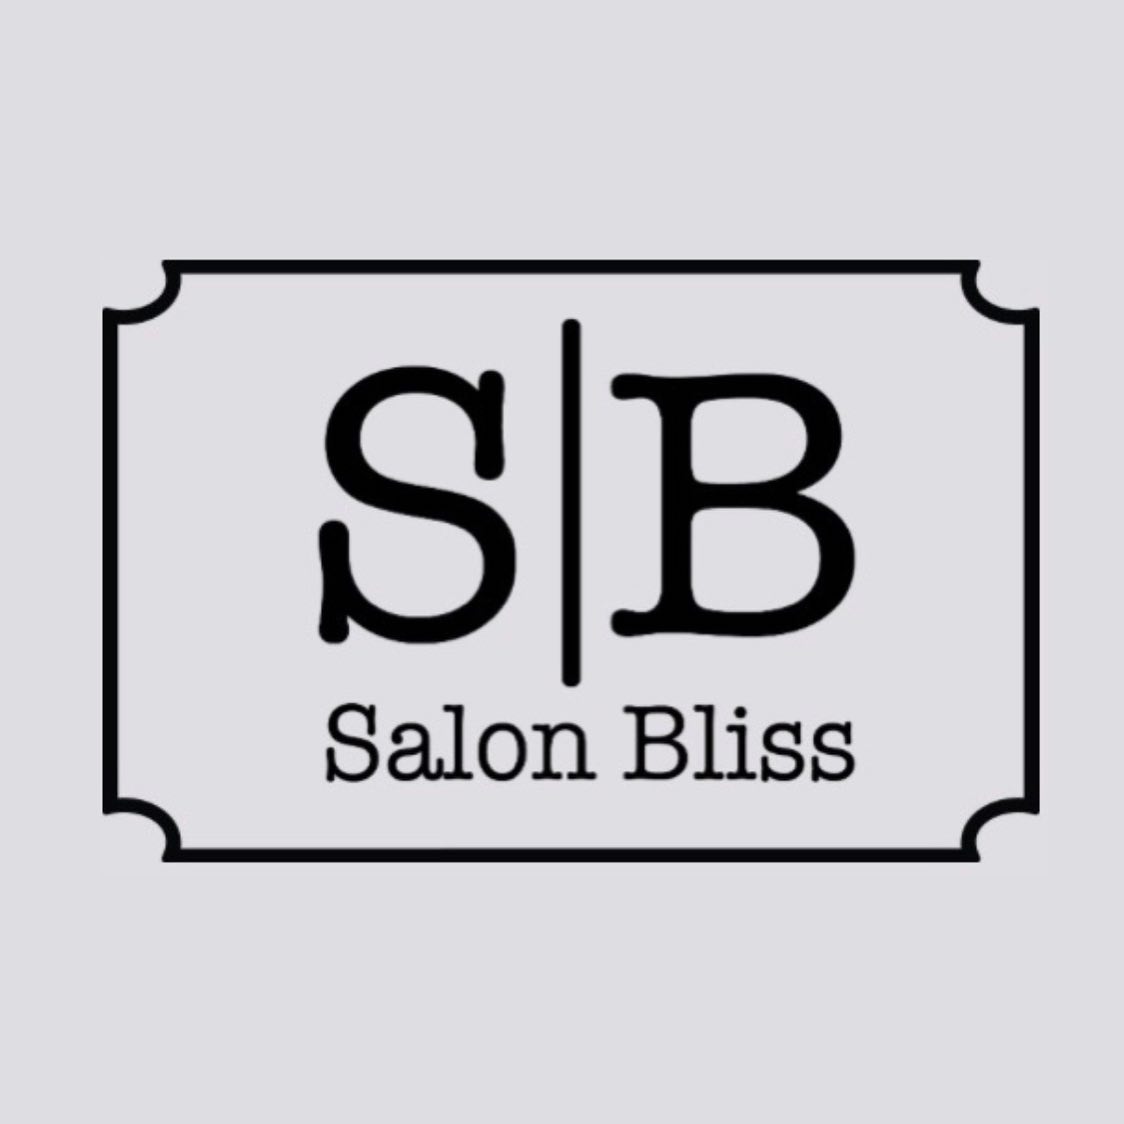 Salon Bliss 413 County Rd 539, Cream Ridge New Jersey 08514